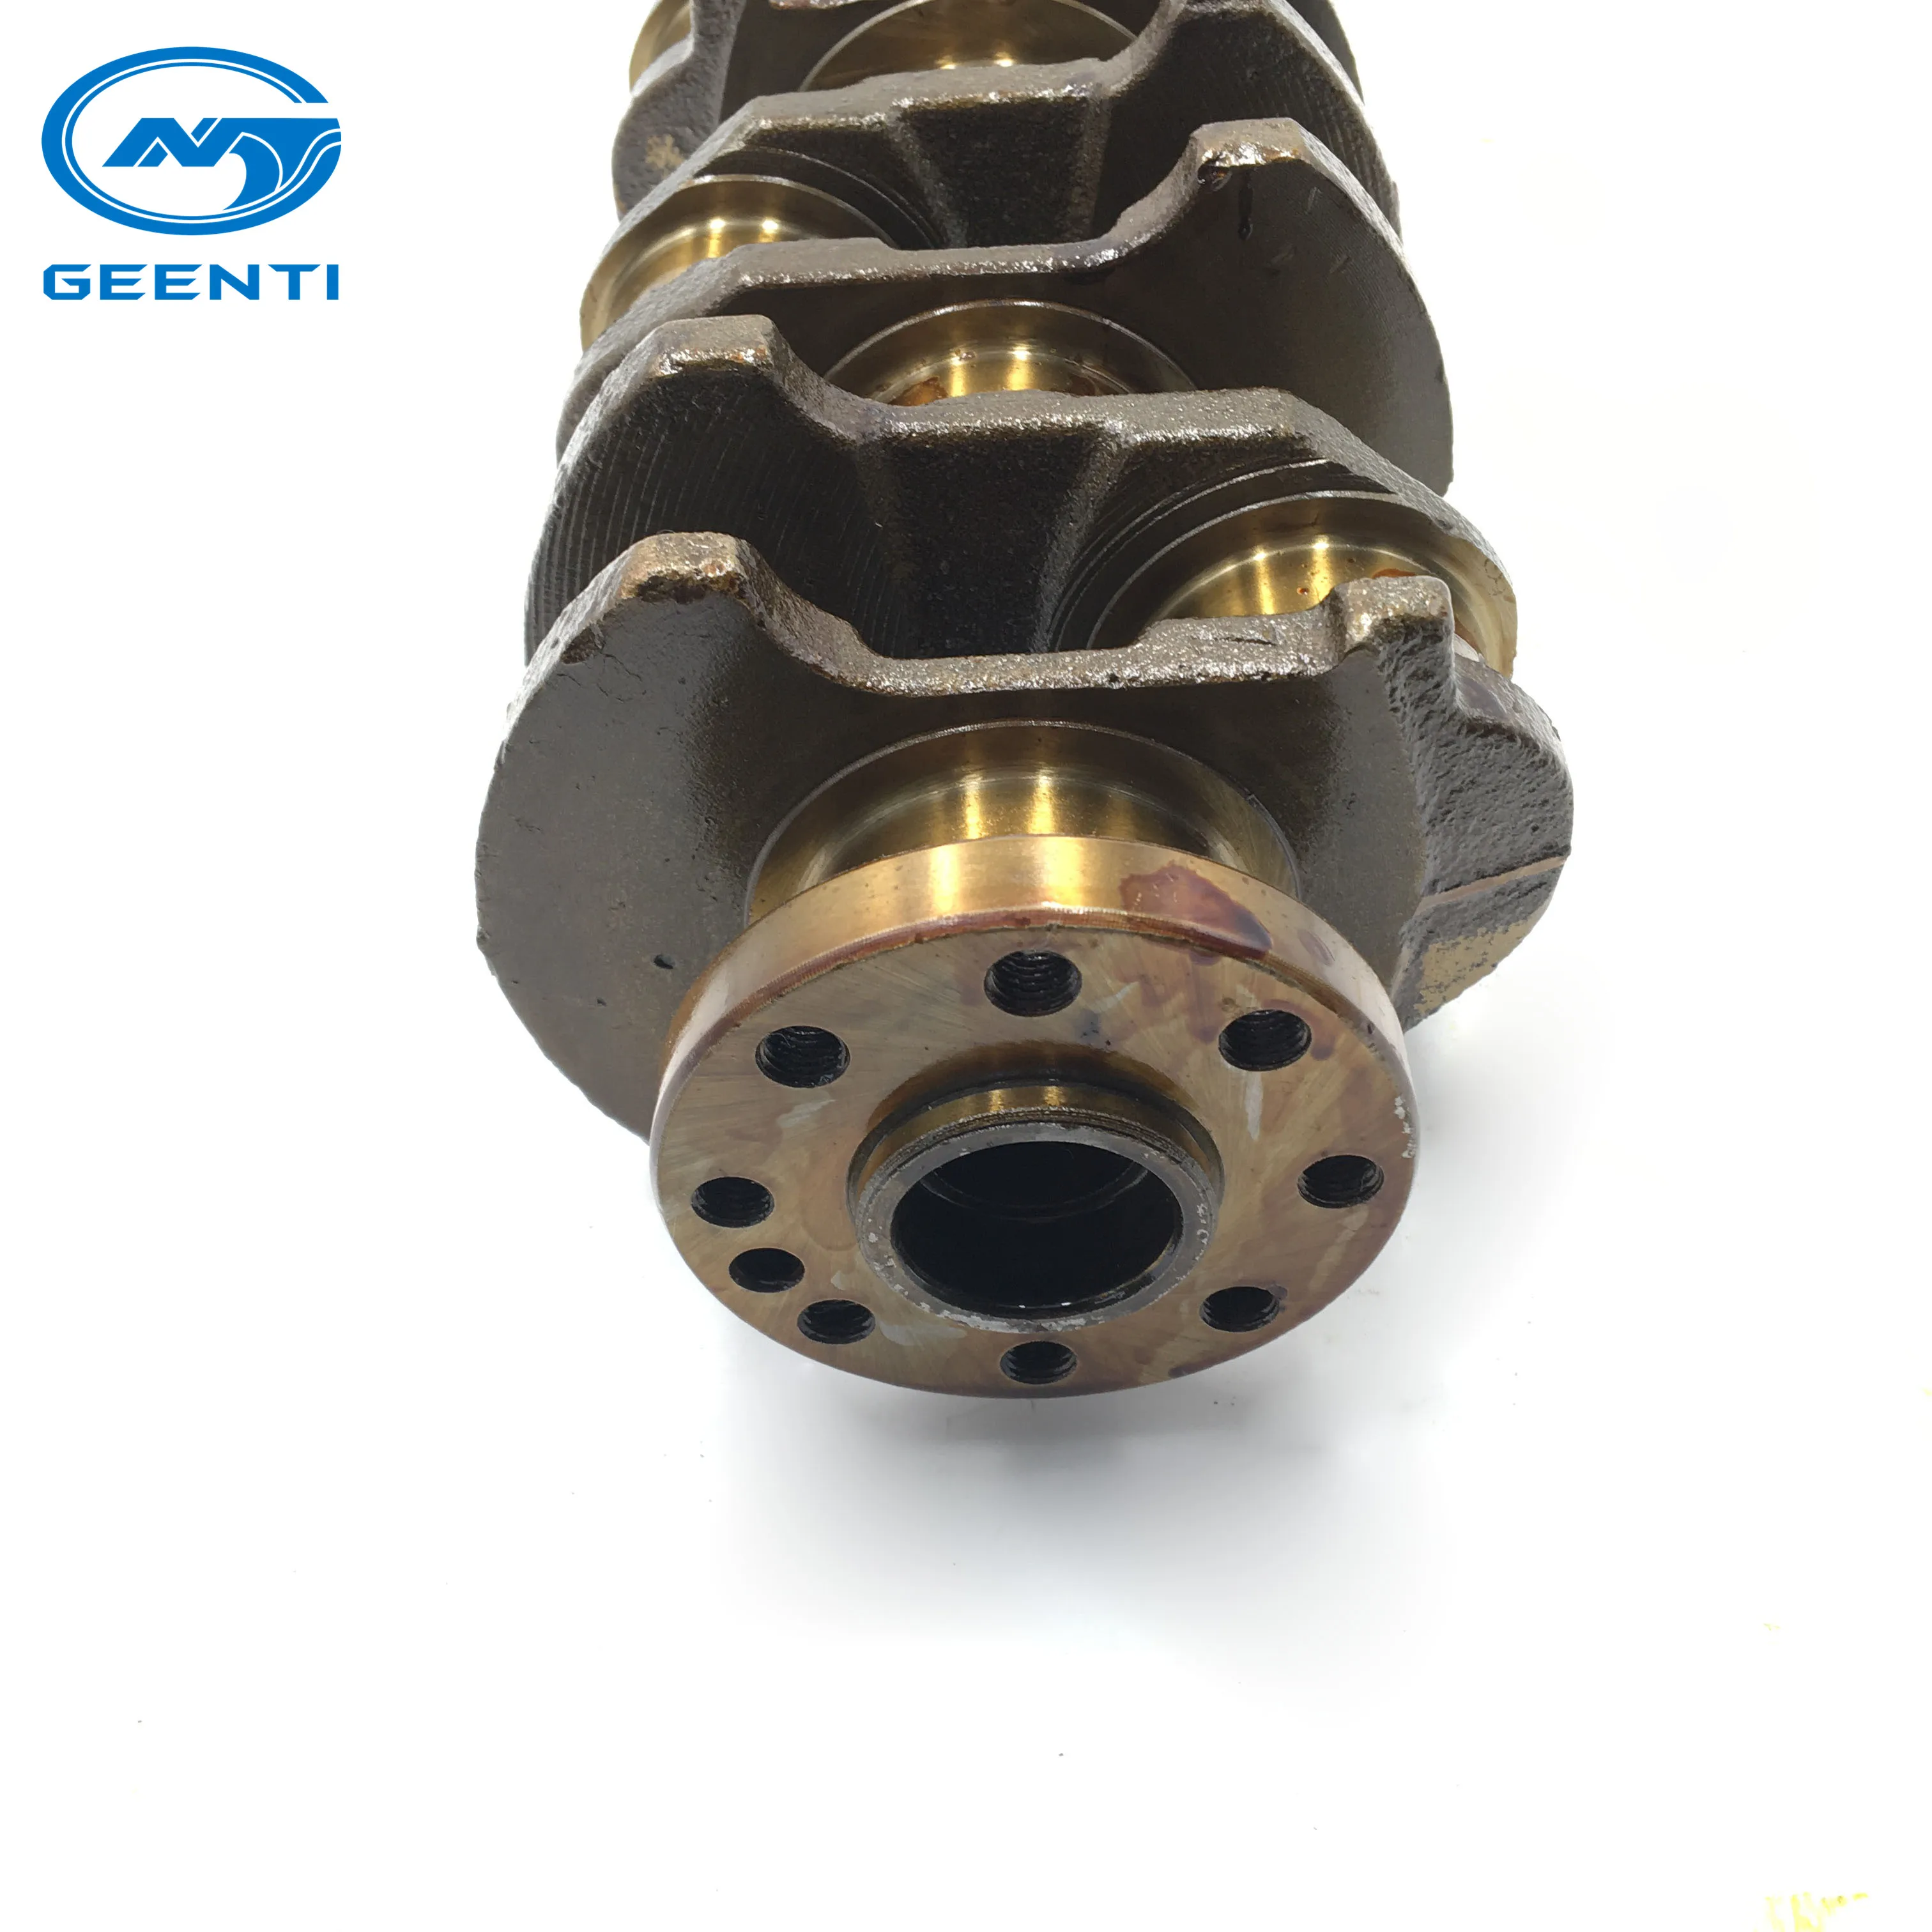 13411-64908 Diesel Engine Nodular Cast Iron Crankshaft For TOYOTA 1C 2C